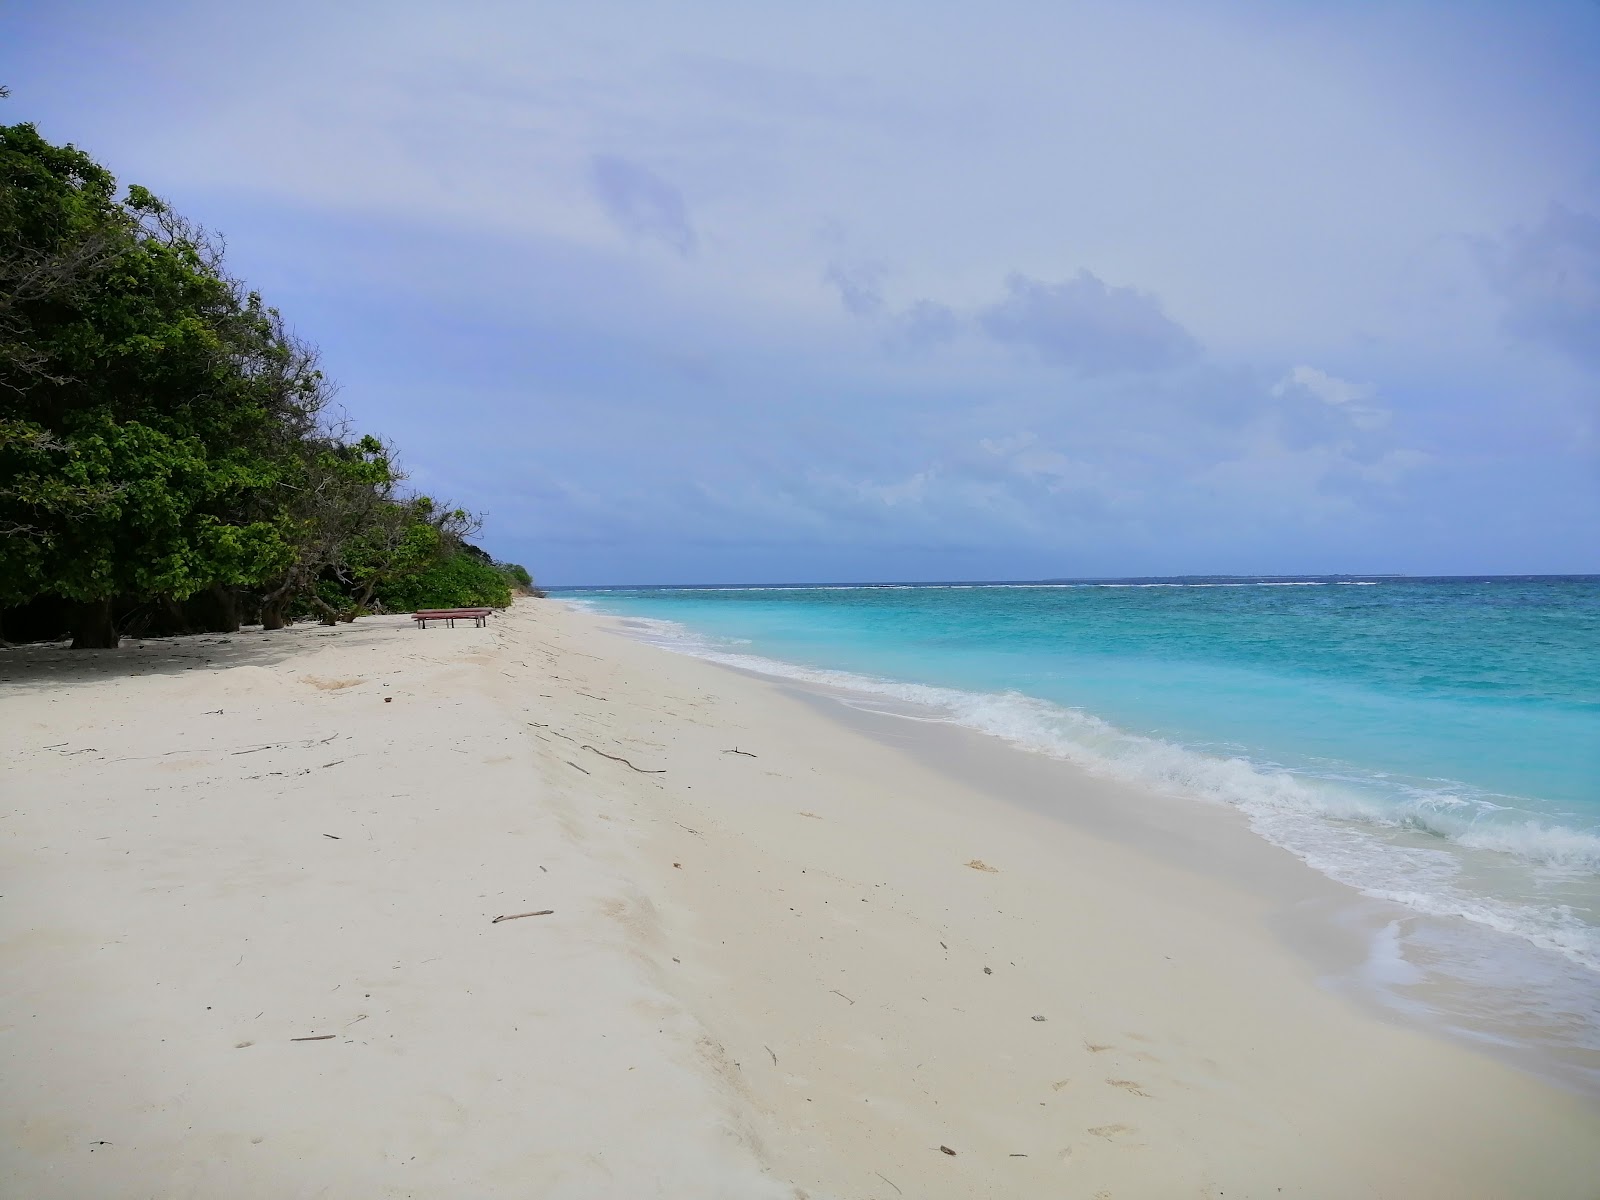 Foto di Raiy Nika Beach ubicato in zona naturale